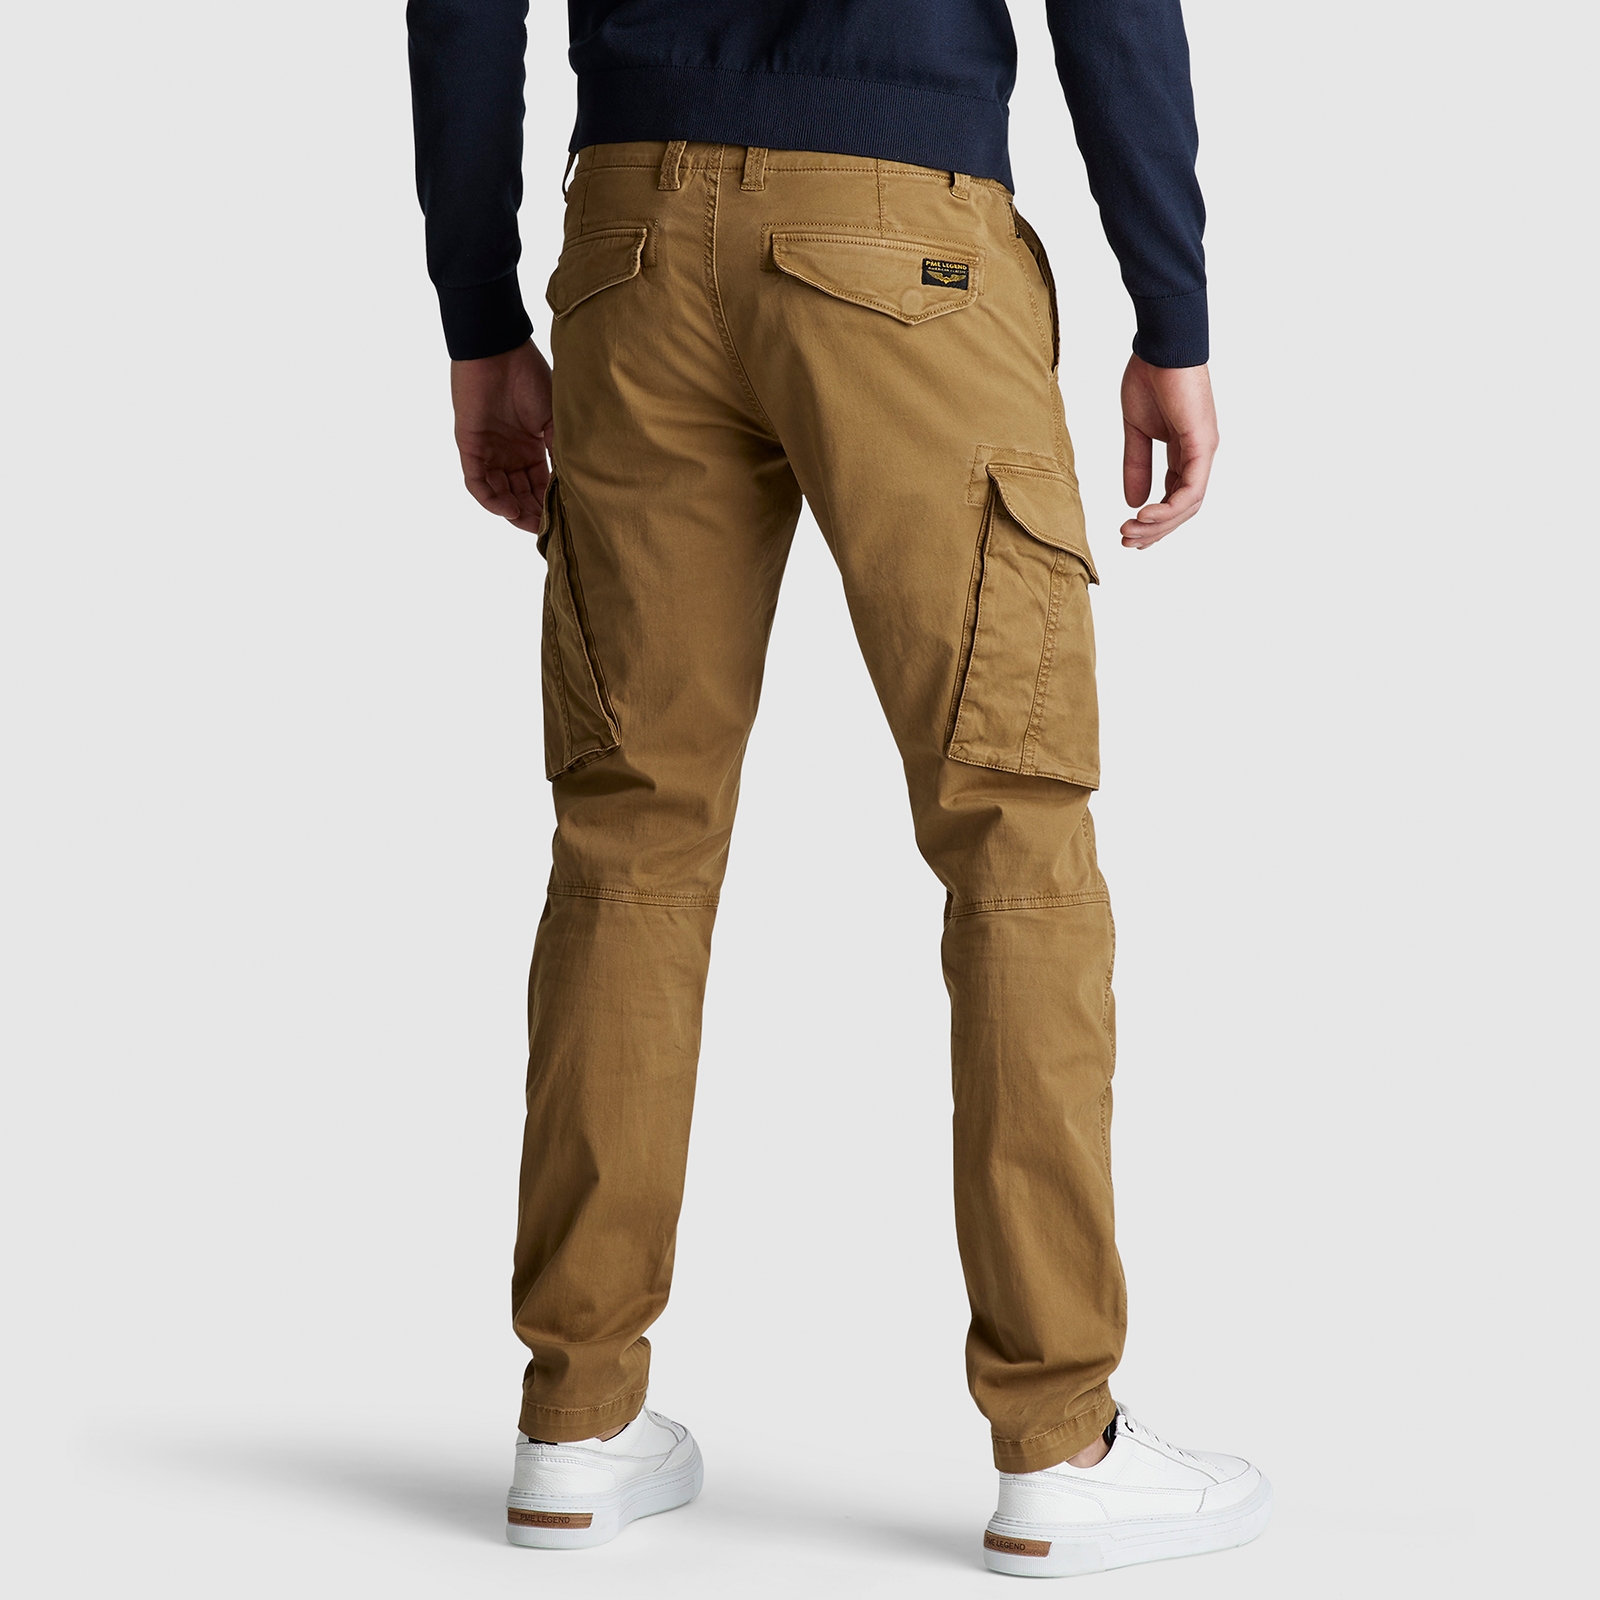 PME LEGEND CARGO great brown PTR218640-8197 - Stretch Twill | STRETCH TWILL  | Cargo | PME Legend Jeans | Männer Jeans | Jeans-Manufaktur